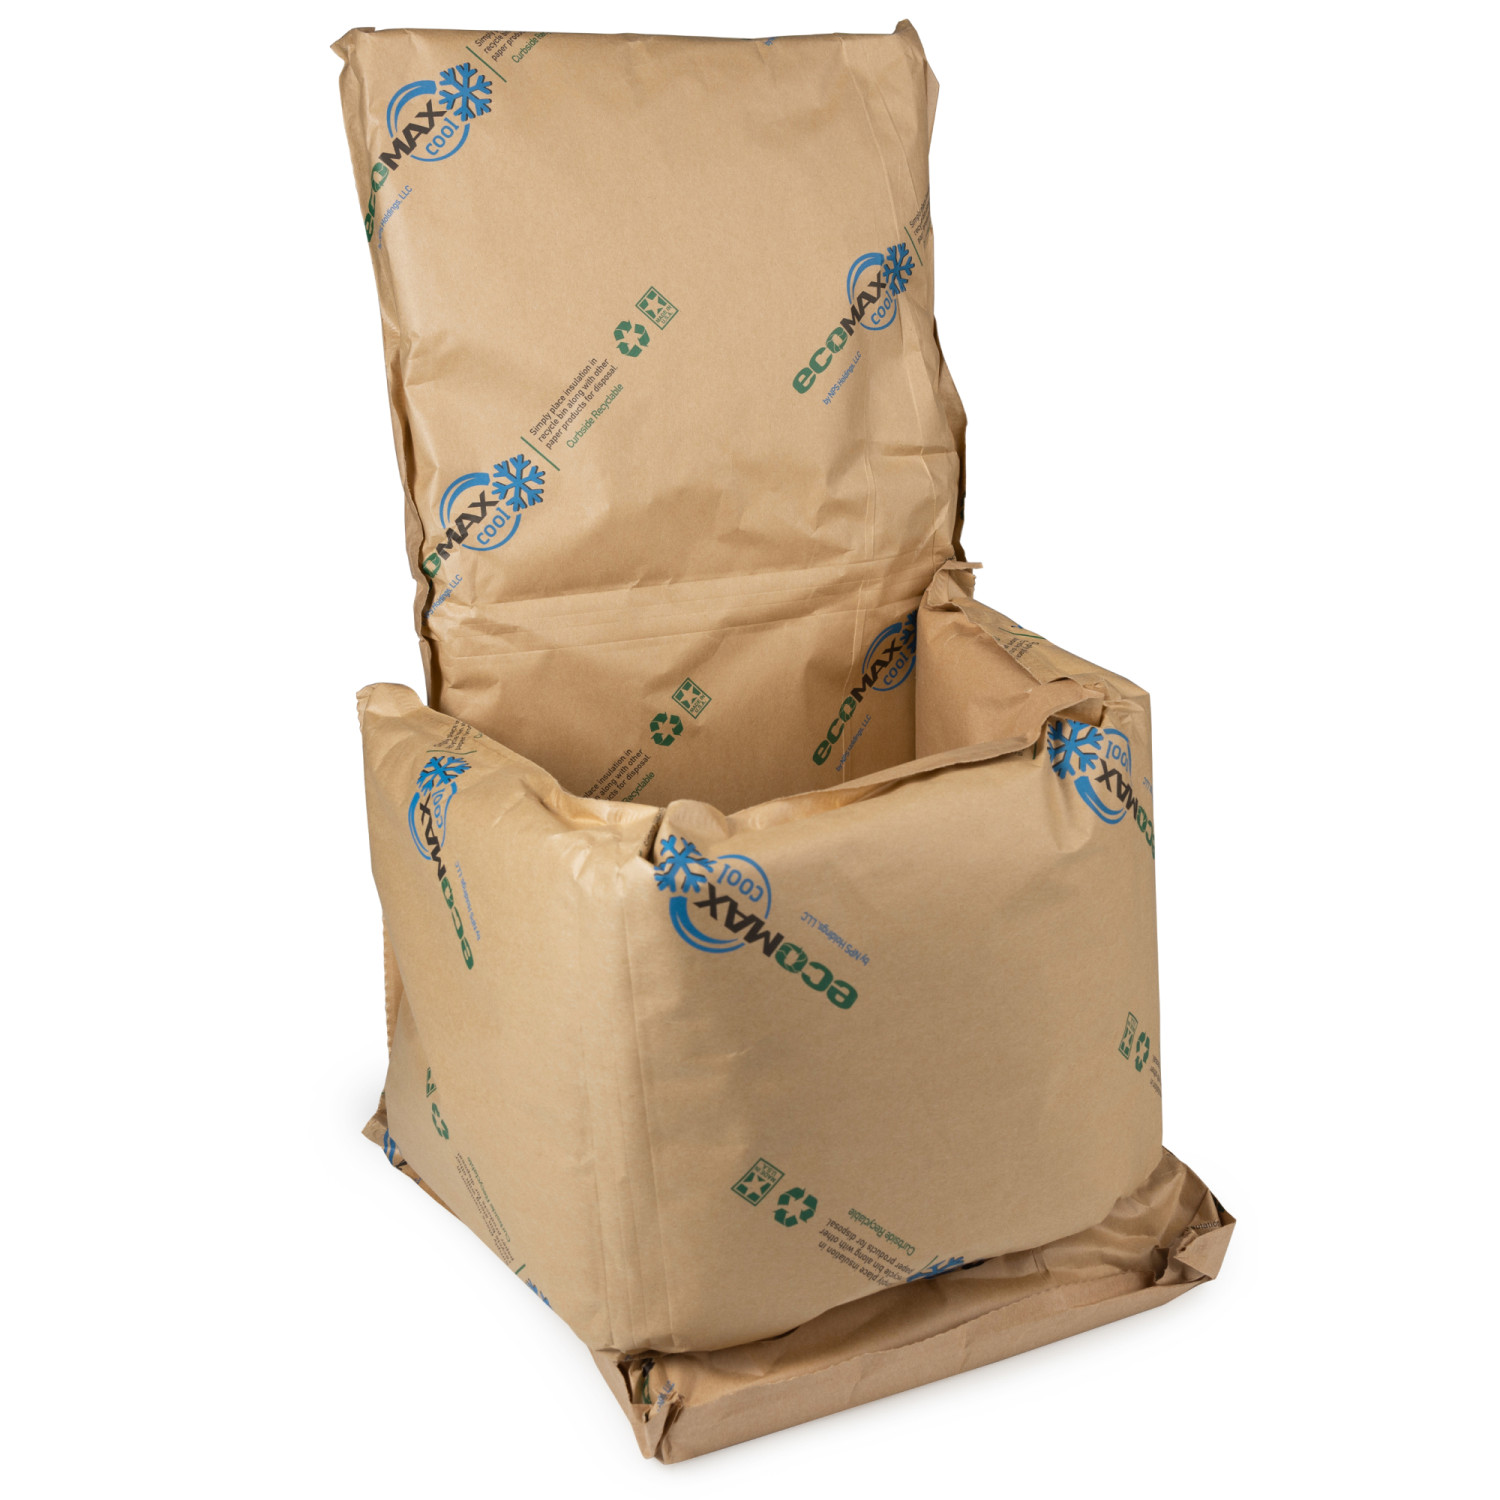 6 x 8 Small Heavy Duty Clear Vacuum Sealer Bags buy in stock in U.S. in  IDL Packaging